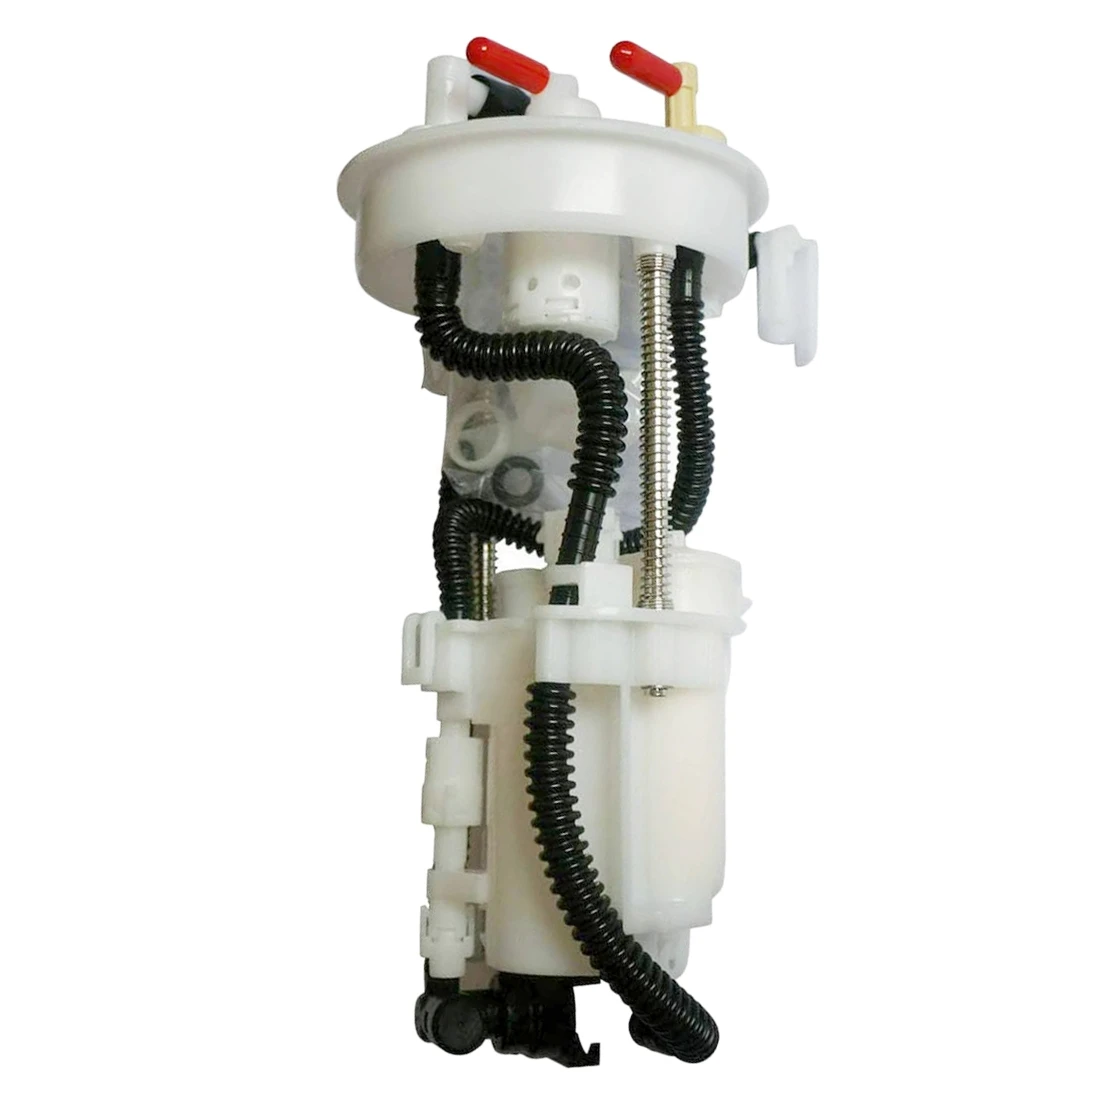 

Electric Fuel Pump Assembly Fuel Filter Fit for Honda Fit Saloon City 1.3L/1.5L Jazz 1.2L/1.4L 2002-2008 16010-SAA-000